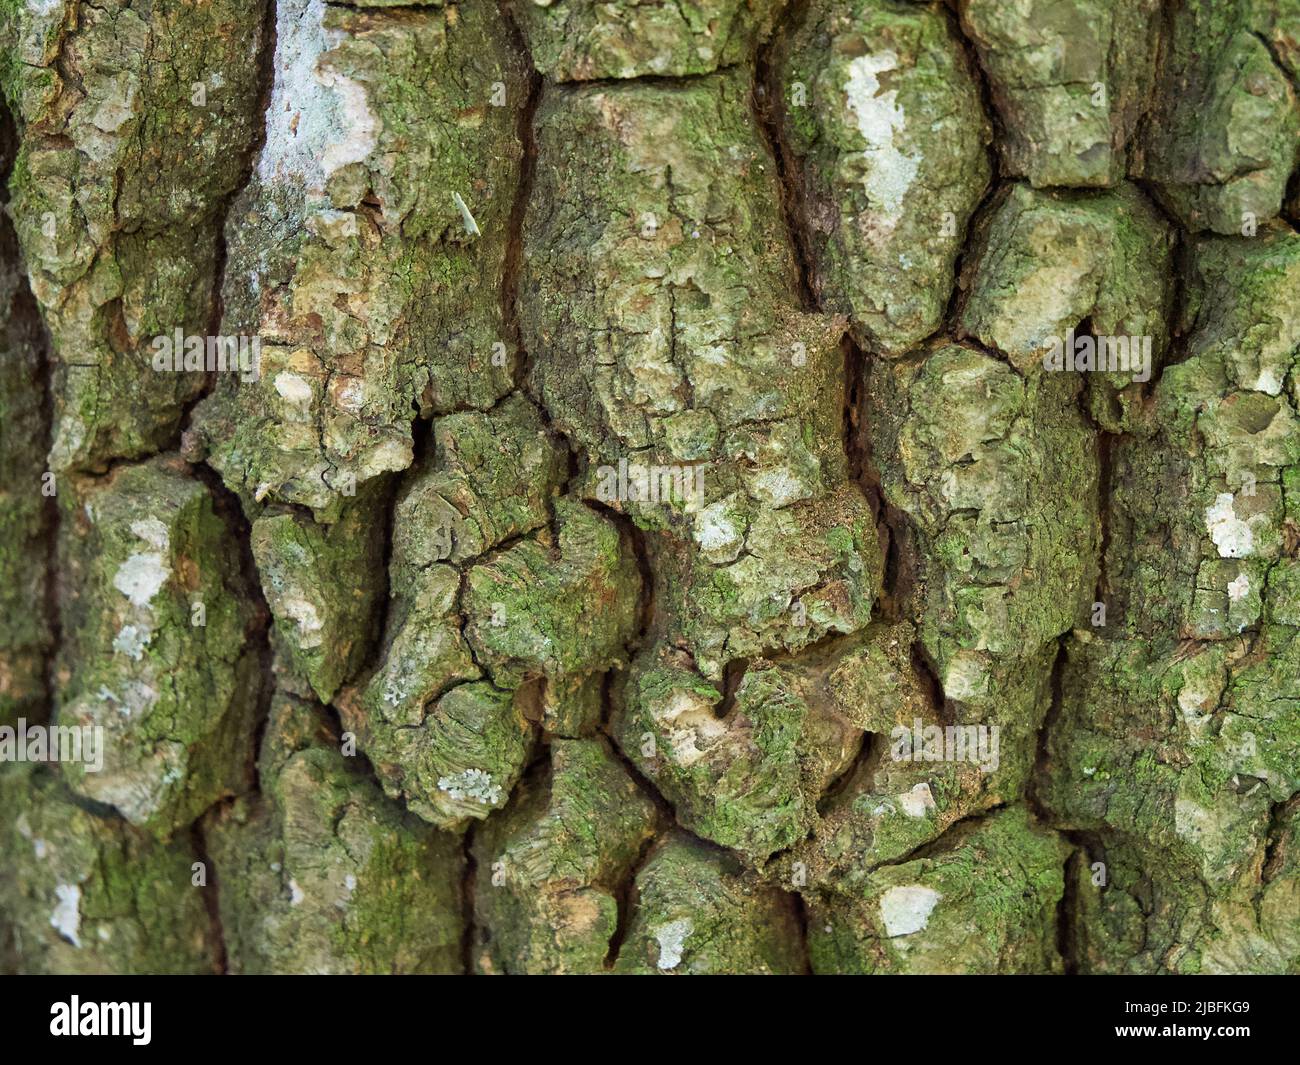 Texture of tree bark, macrophoto. Full-frame image of tree bark, background. Stock Photo